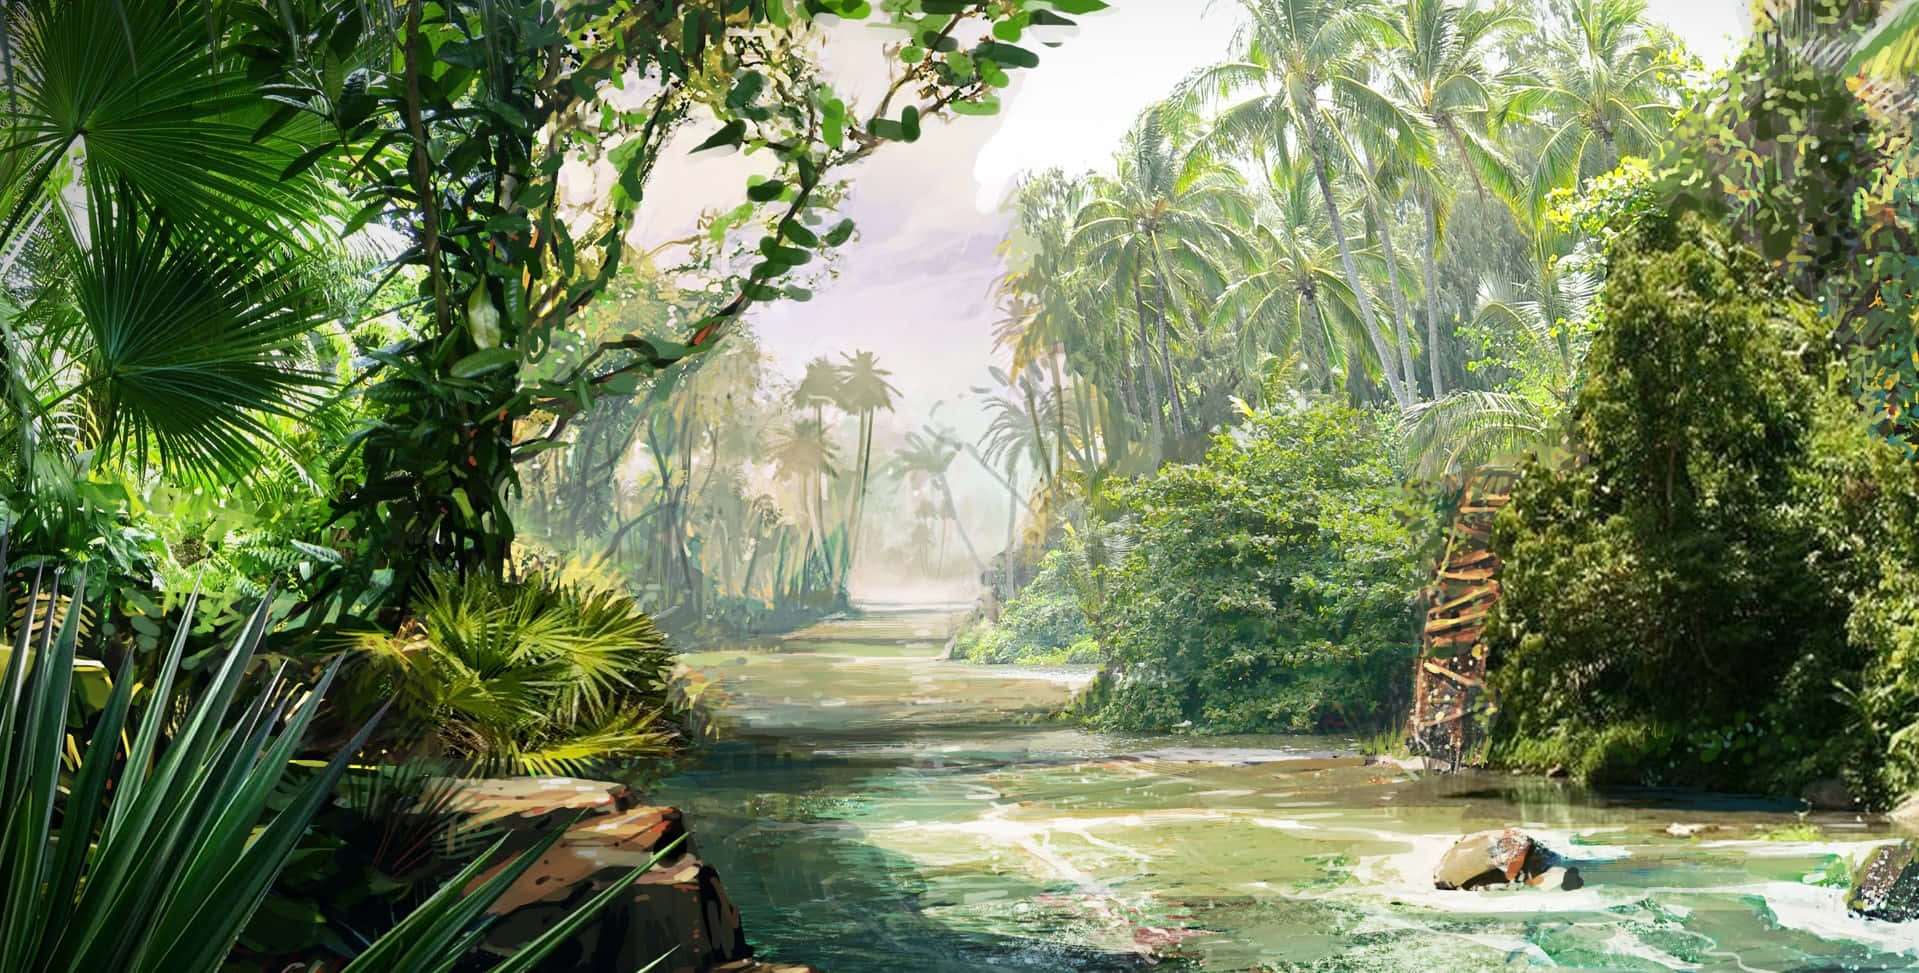 Flowing River In A Jungle Desktop Wallpaper